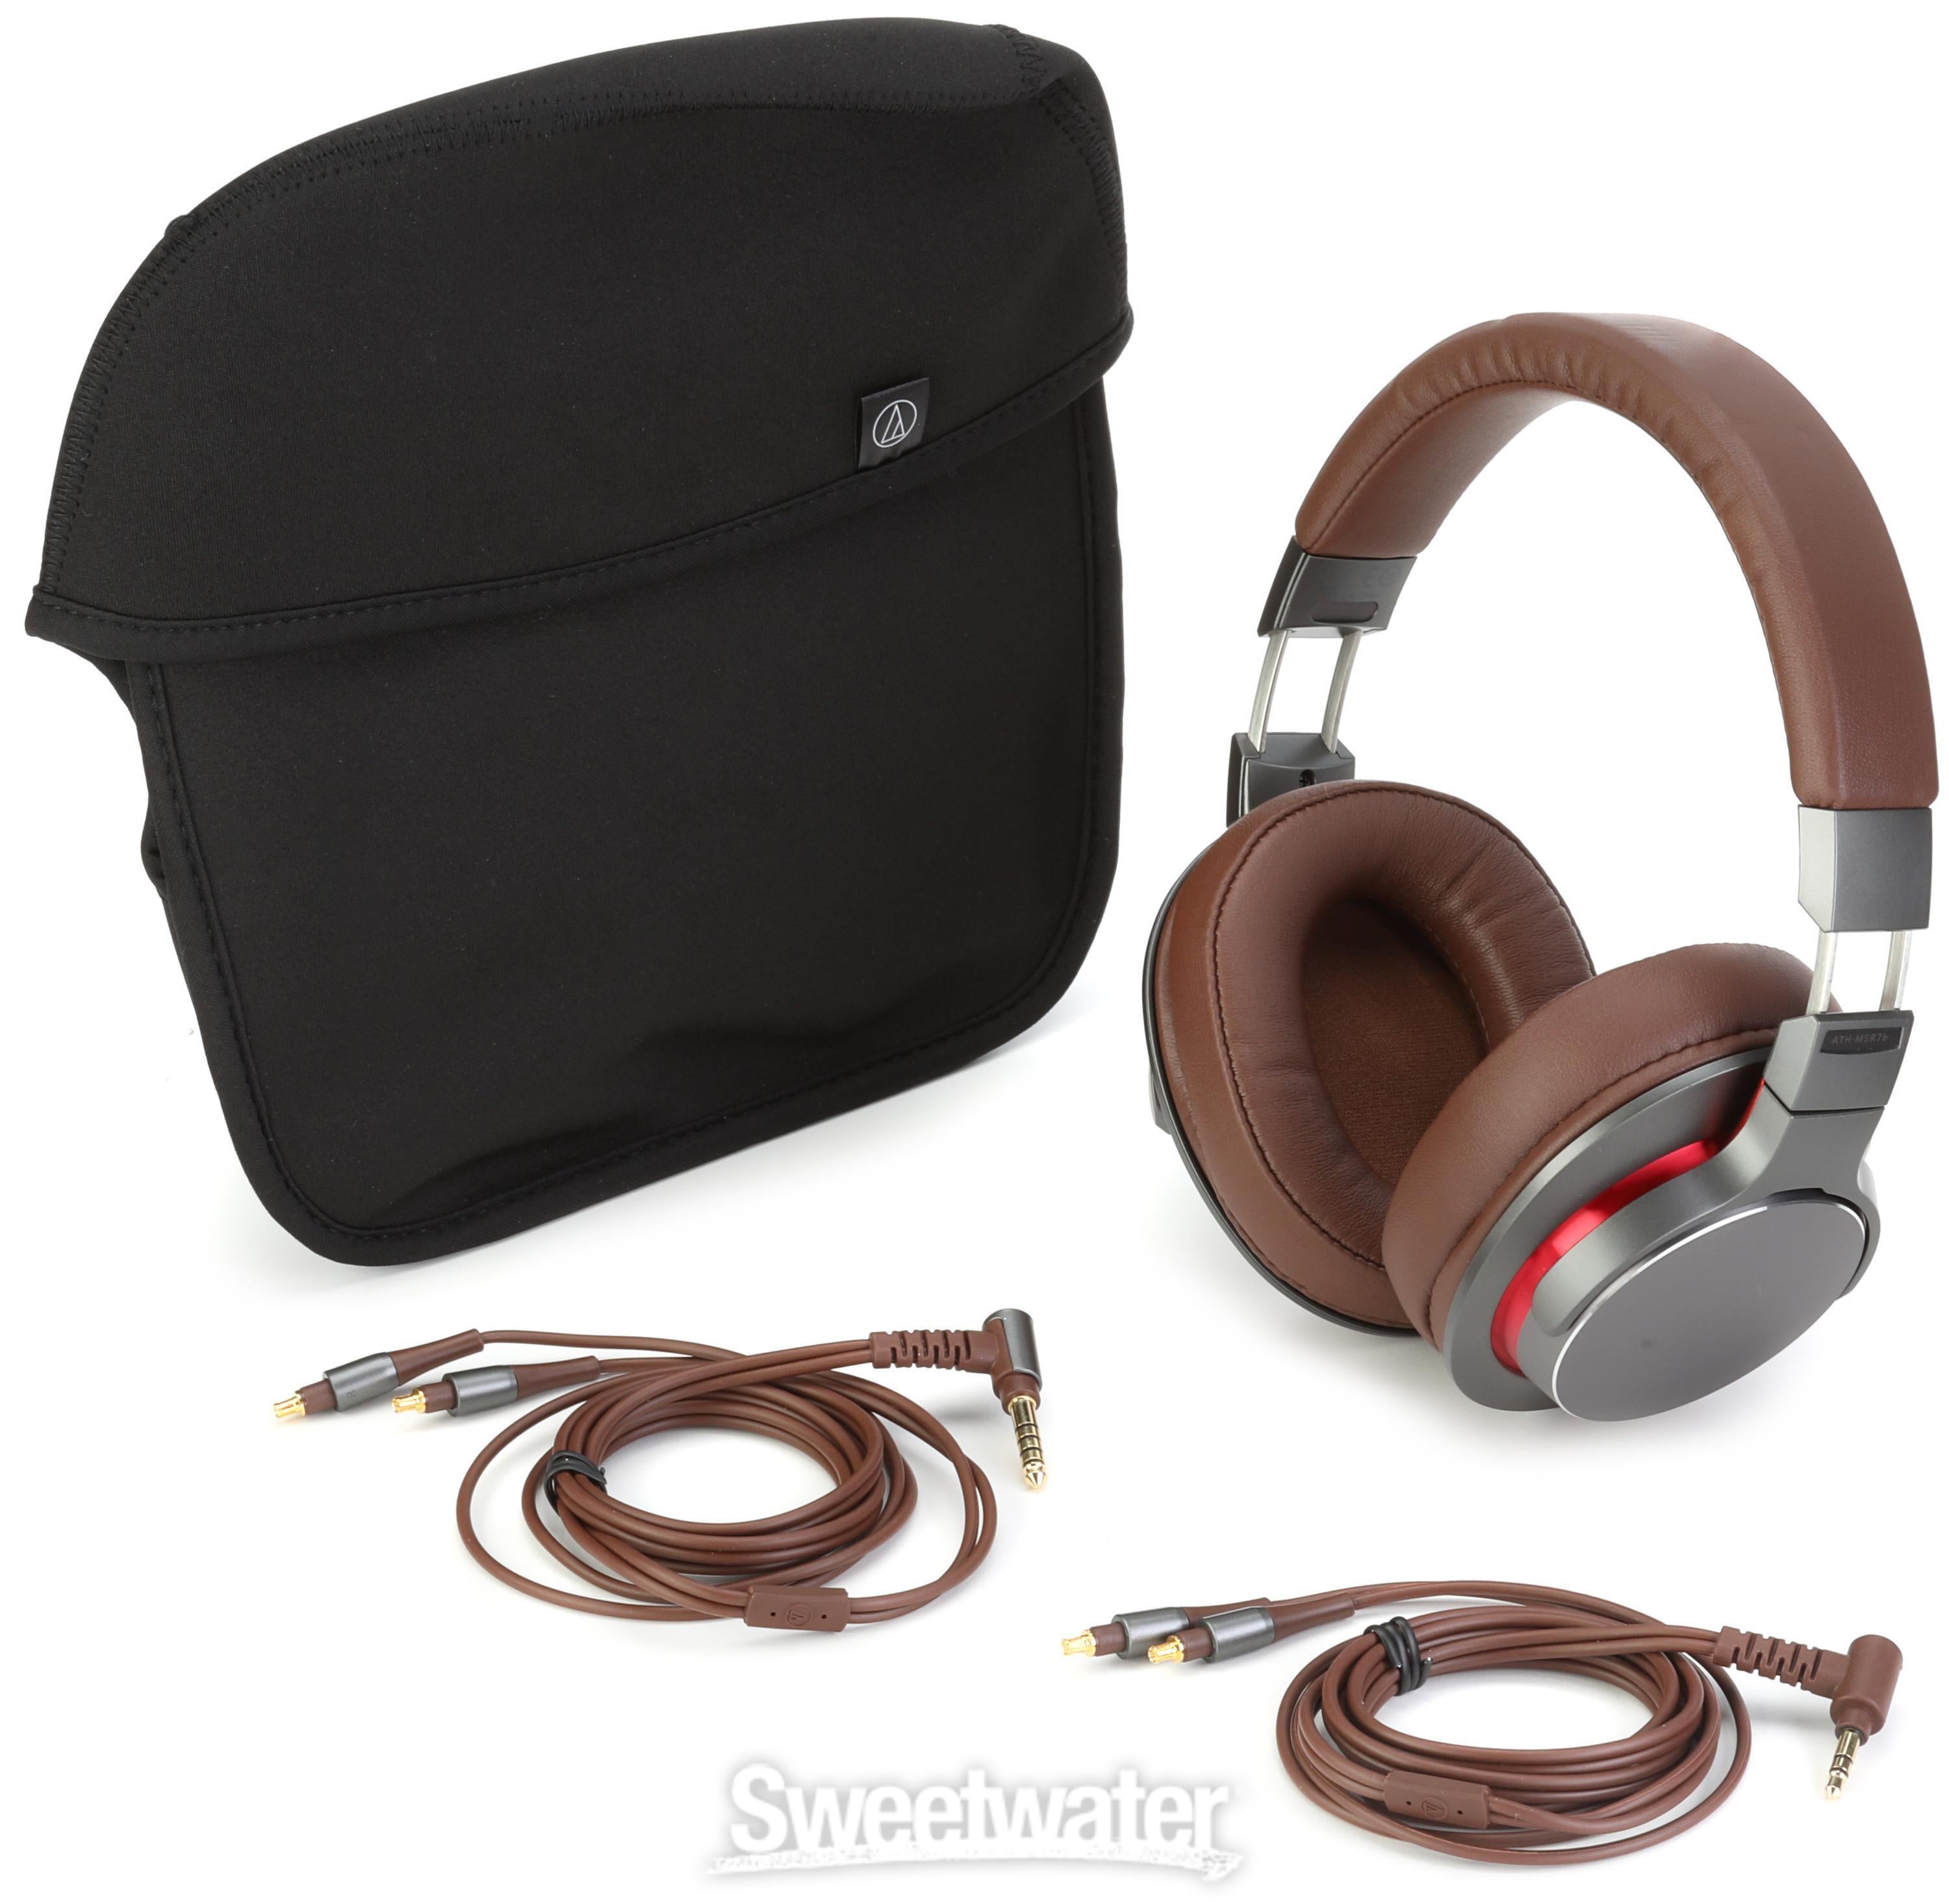 Audio-Technica ATH-MSR7b High-resolution Closed-back Dynamic Headphones -  Gun Metal